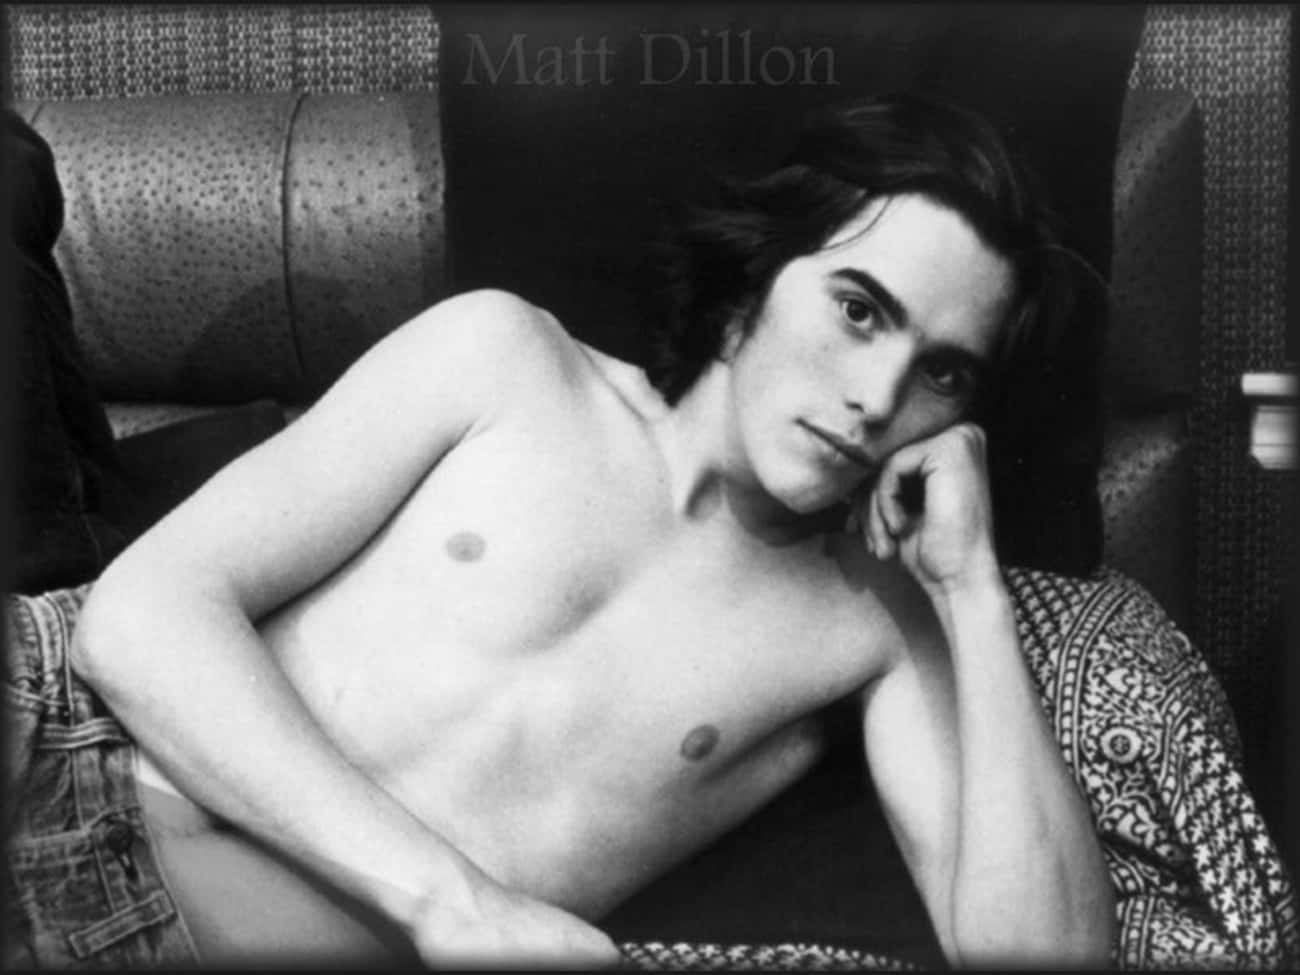 Young Matt Dillon Shirtless Lying Down Pose